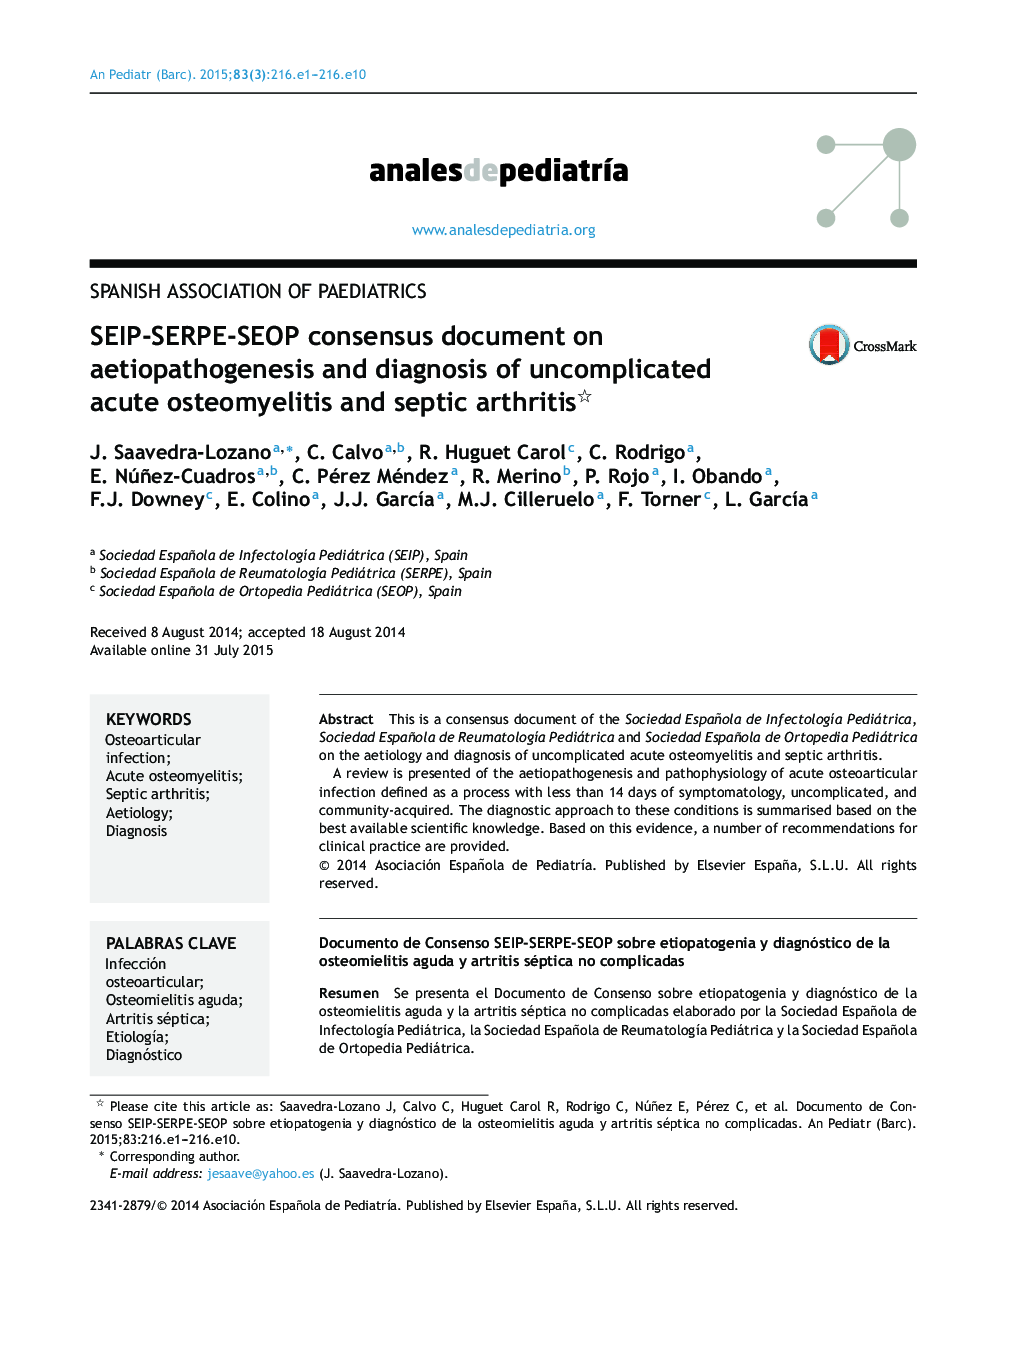 SEIP-SERPE-SEOP consensus document on aetiopathogenesis and diagnosis of uncomplicated acute osteomyelitis and septic arthritis